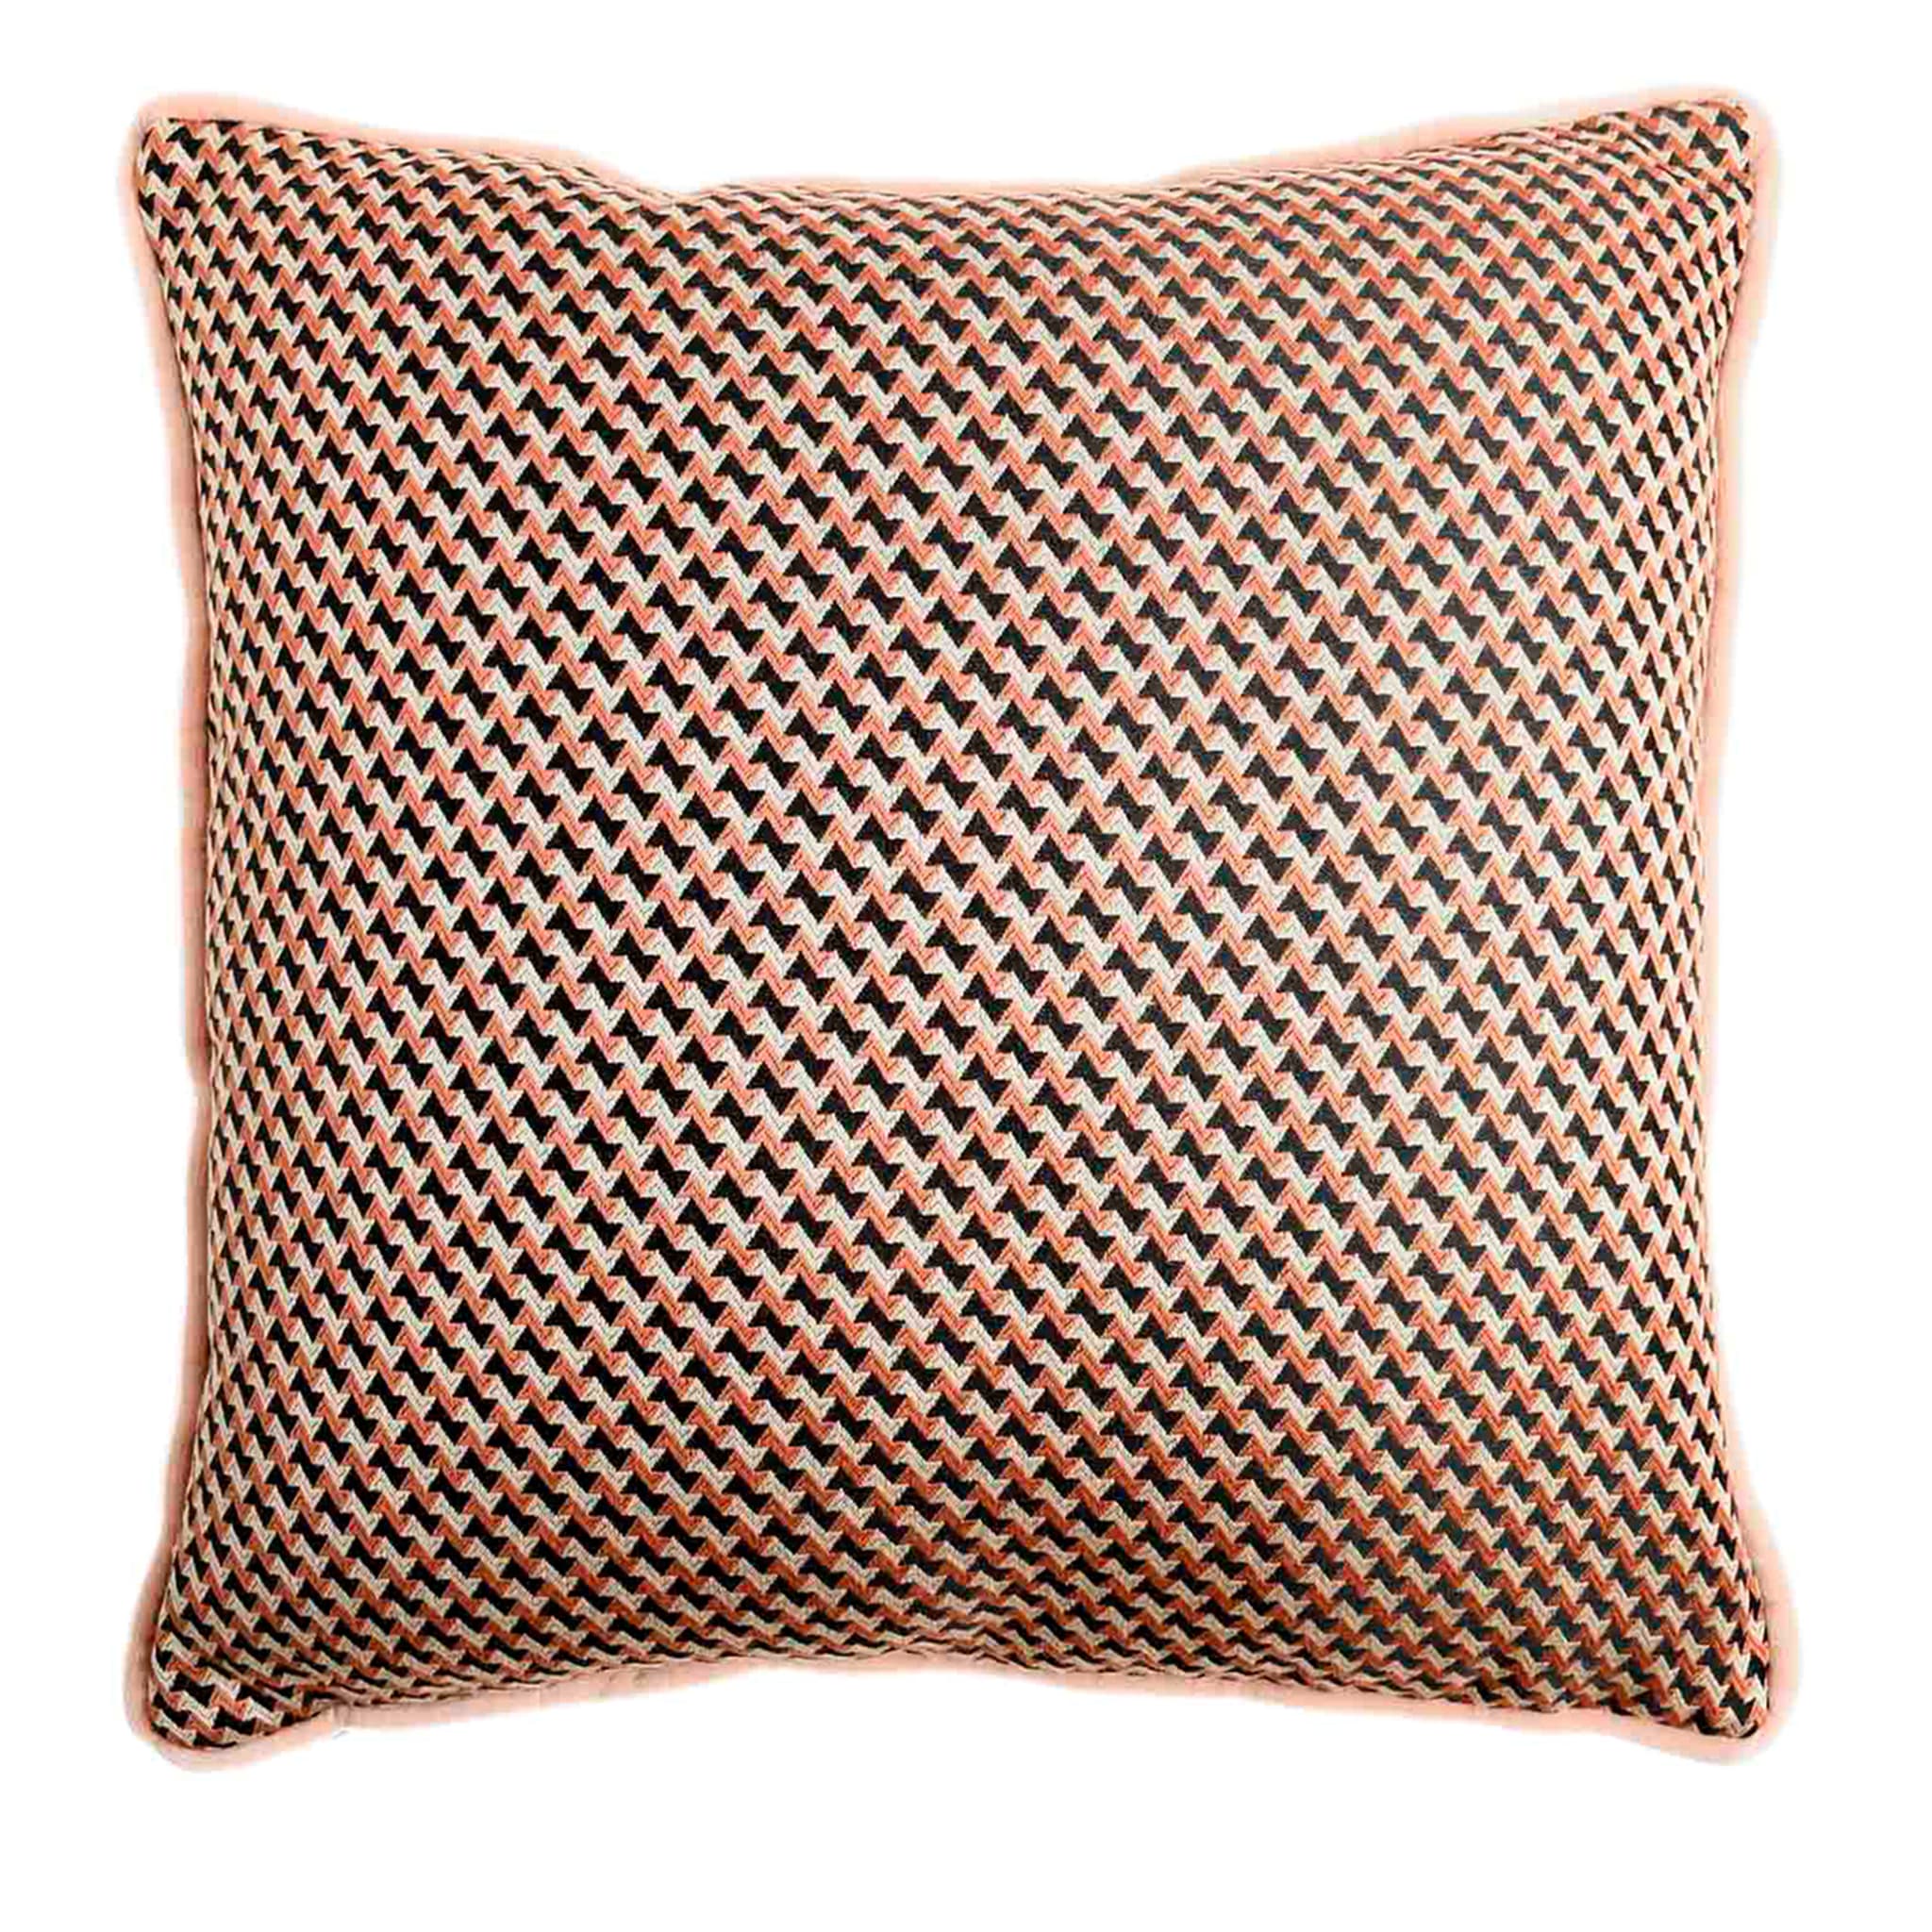 Decorative Carrè Cushion in Micro-Patterned jacquard fabric - Main view